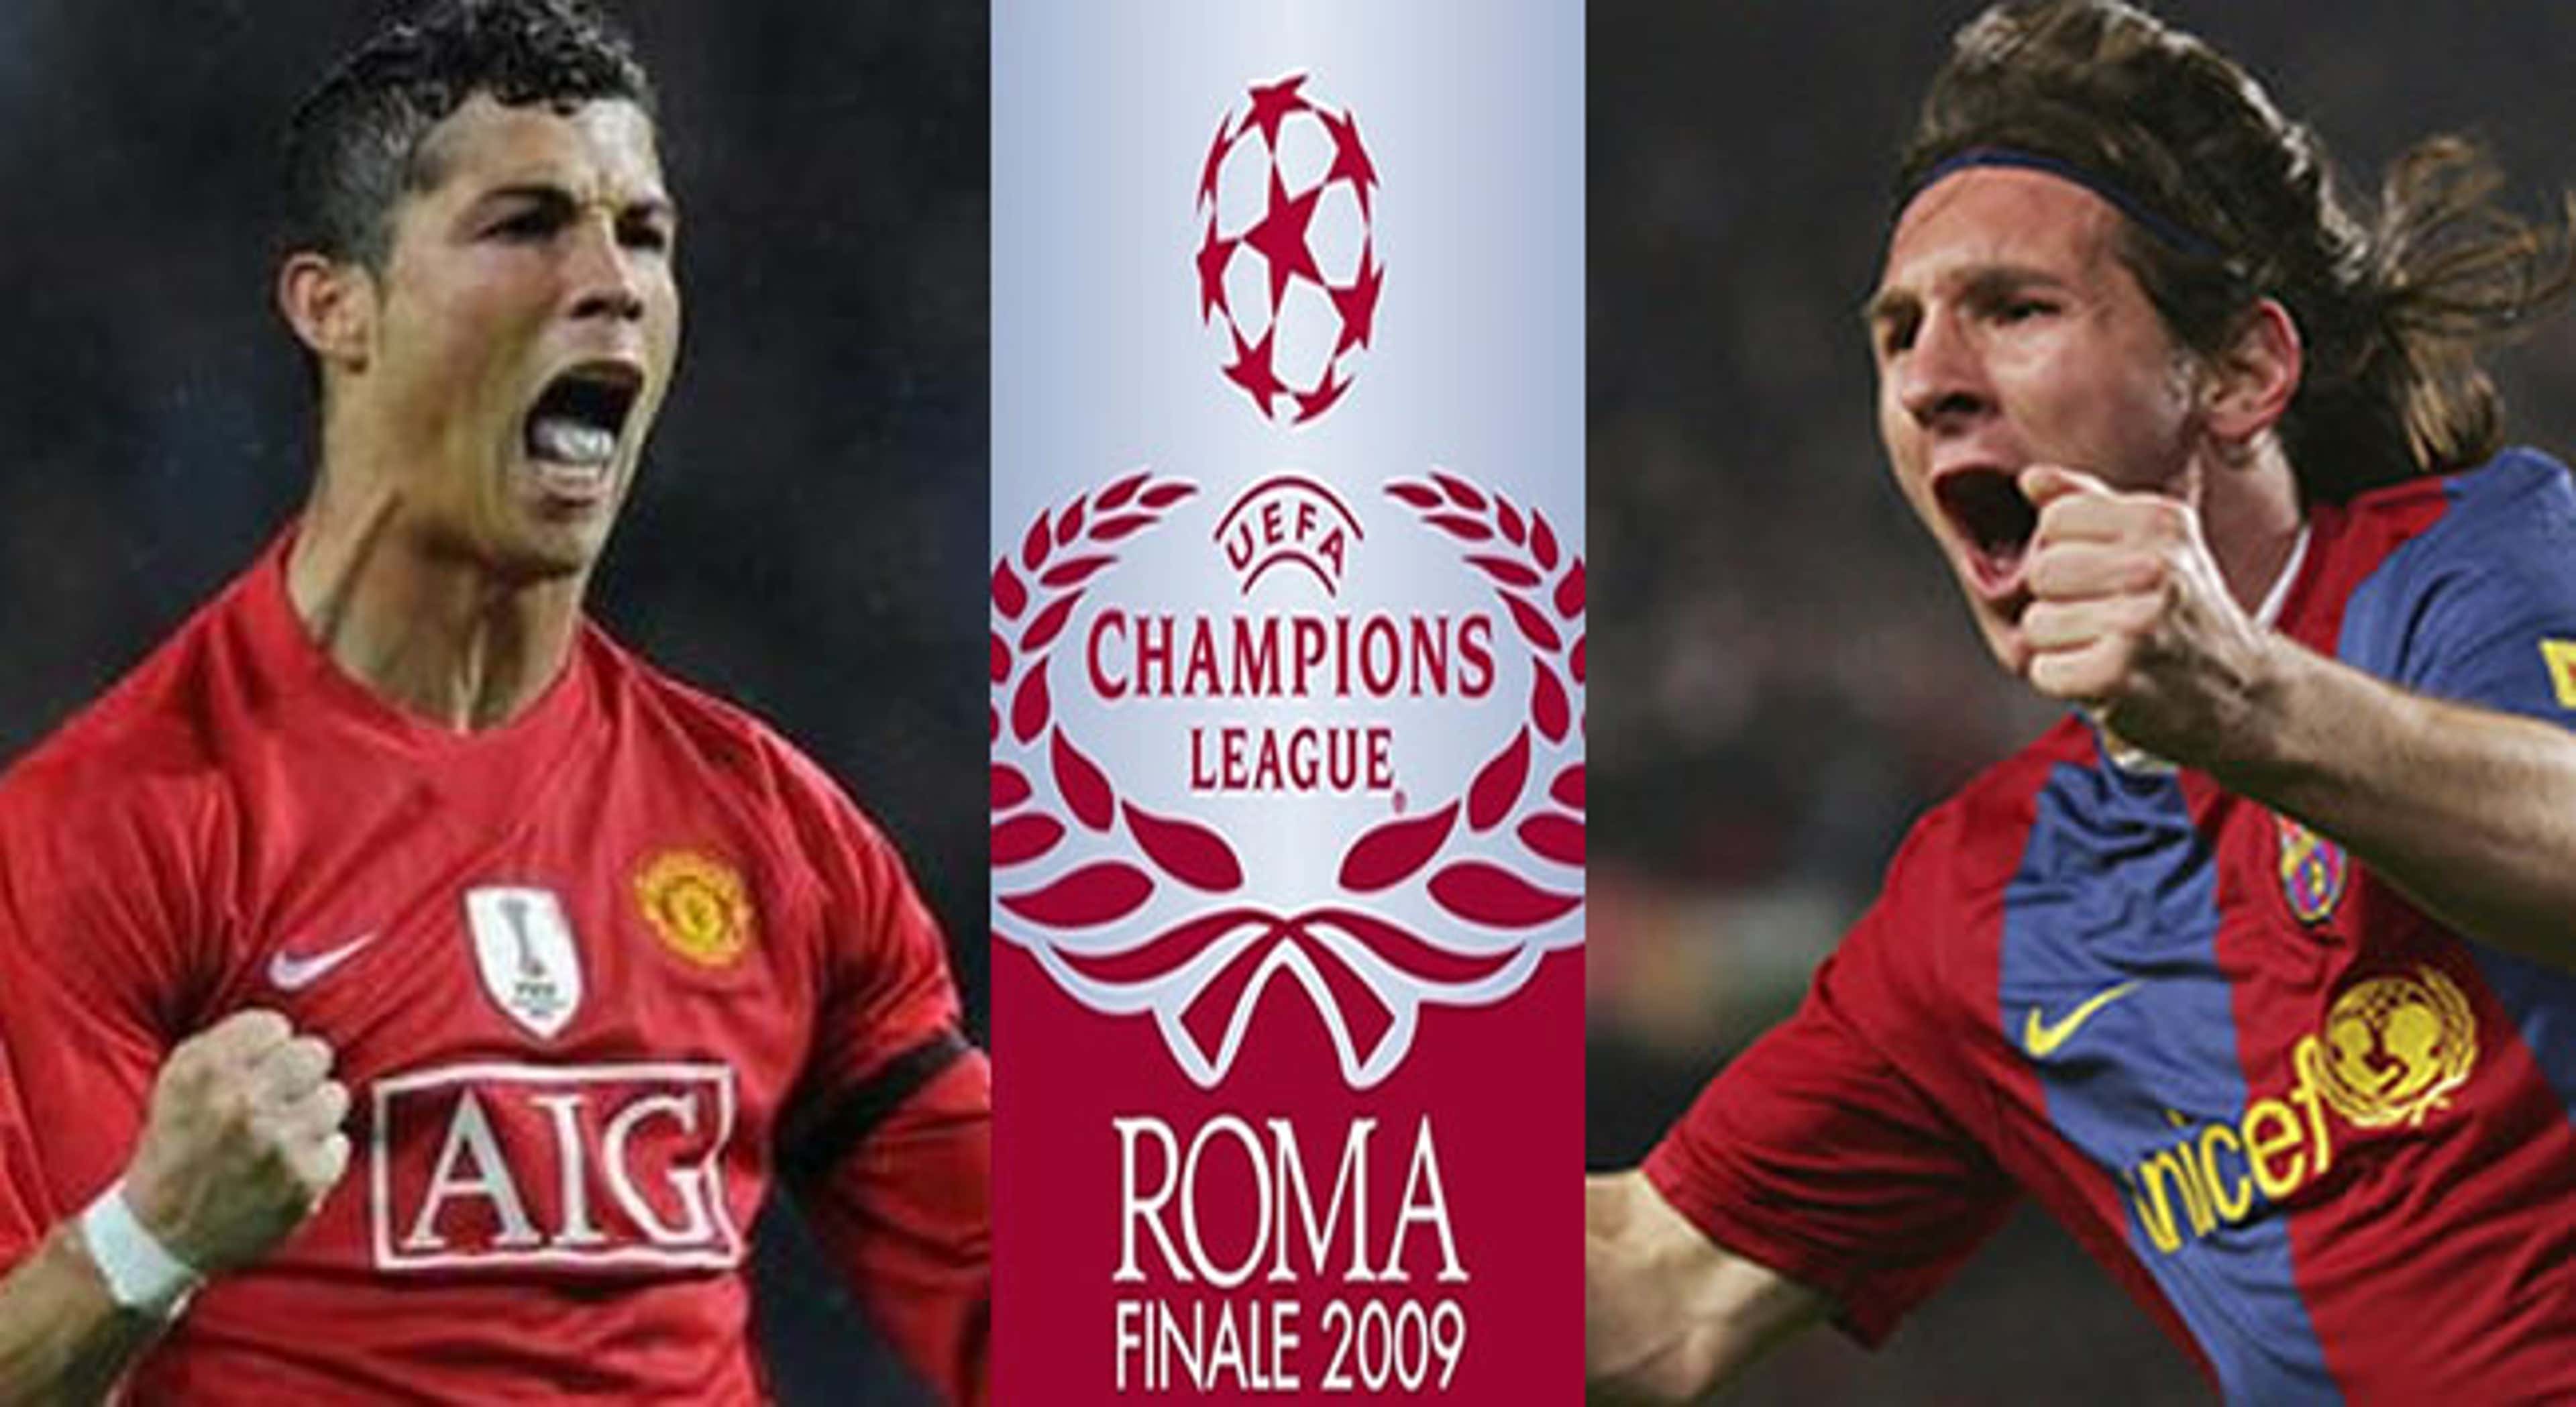 2009 UEFA Champions League final - Wikipedia